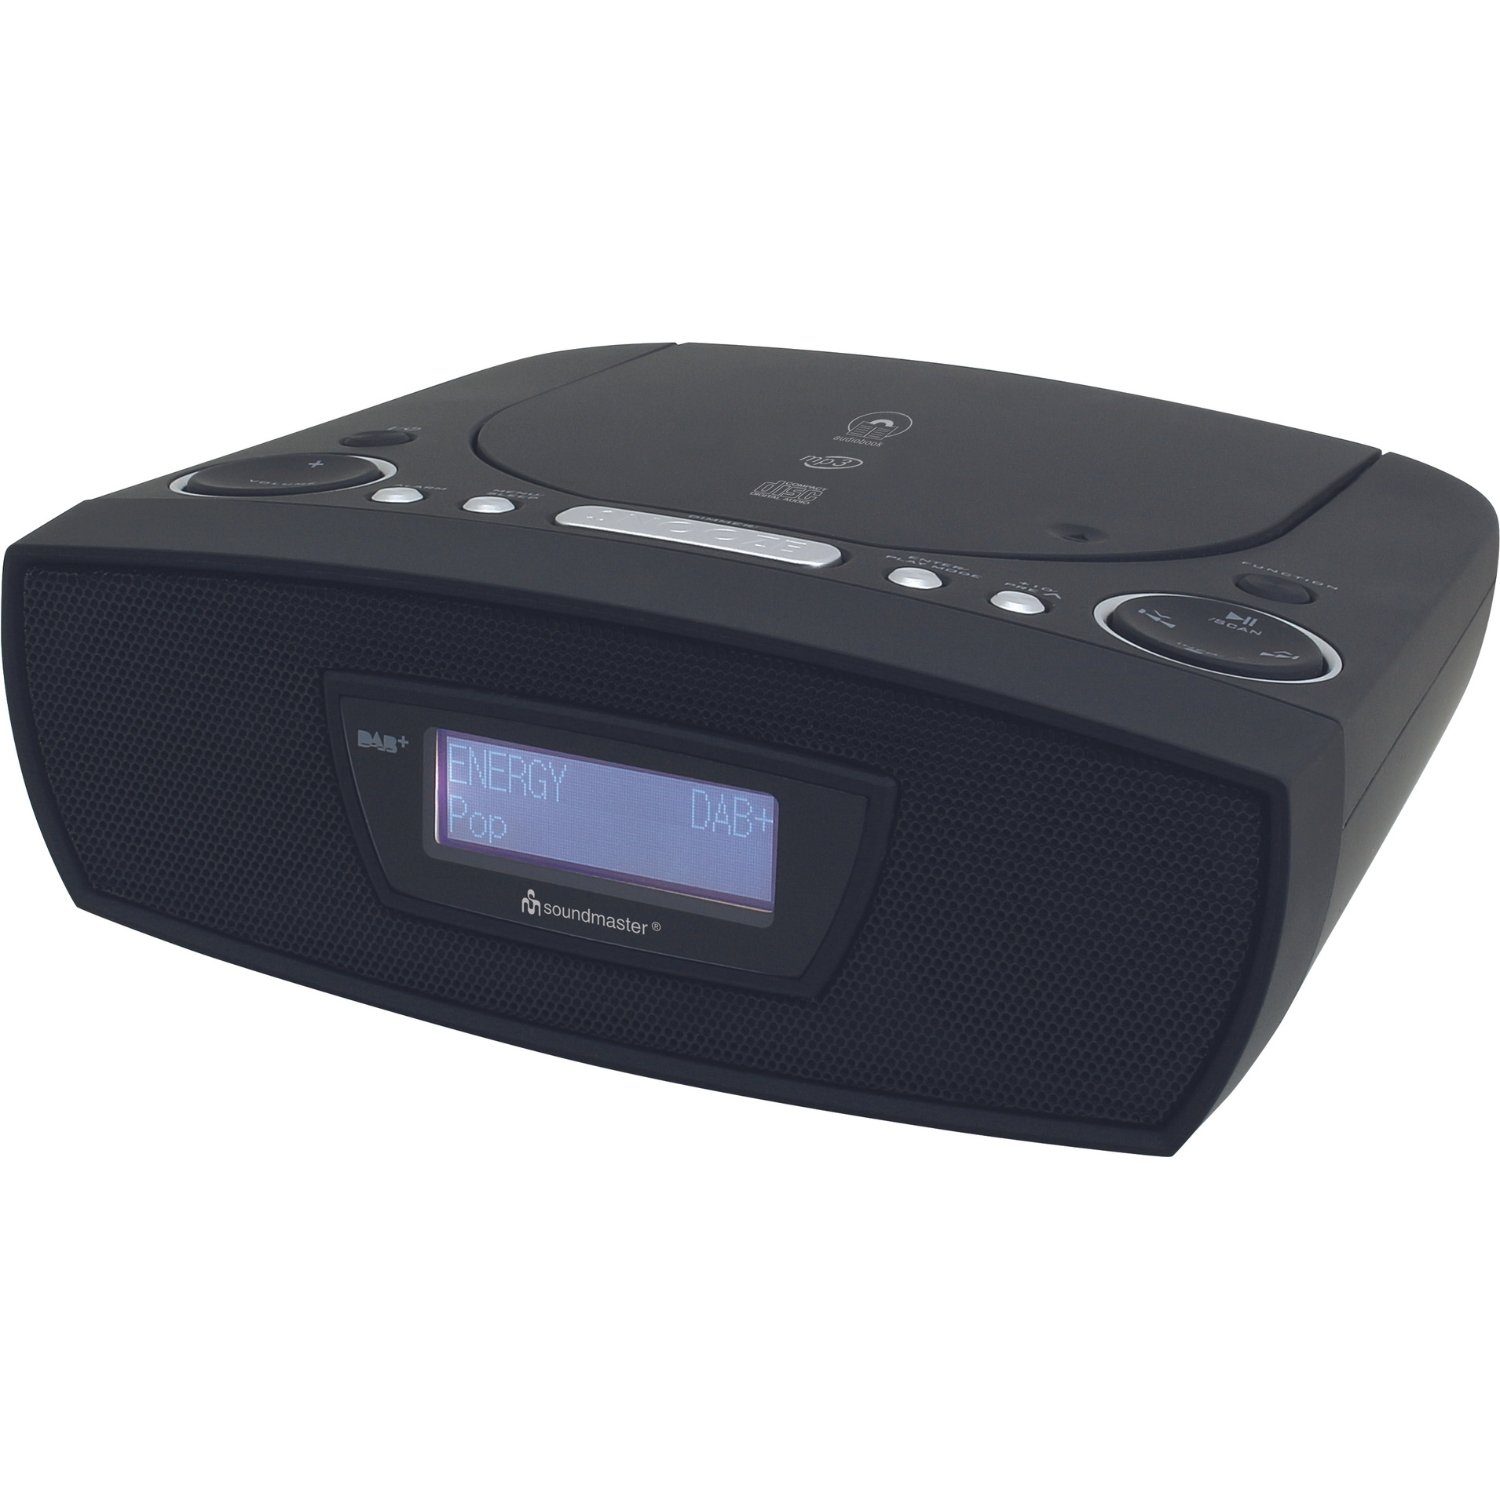 URD480SW mit CD Resume Uhrenradio Funktion MP3 DAB+ Uhrenradio Soundmaster USB UKW und